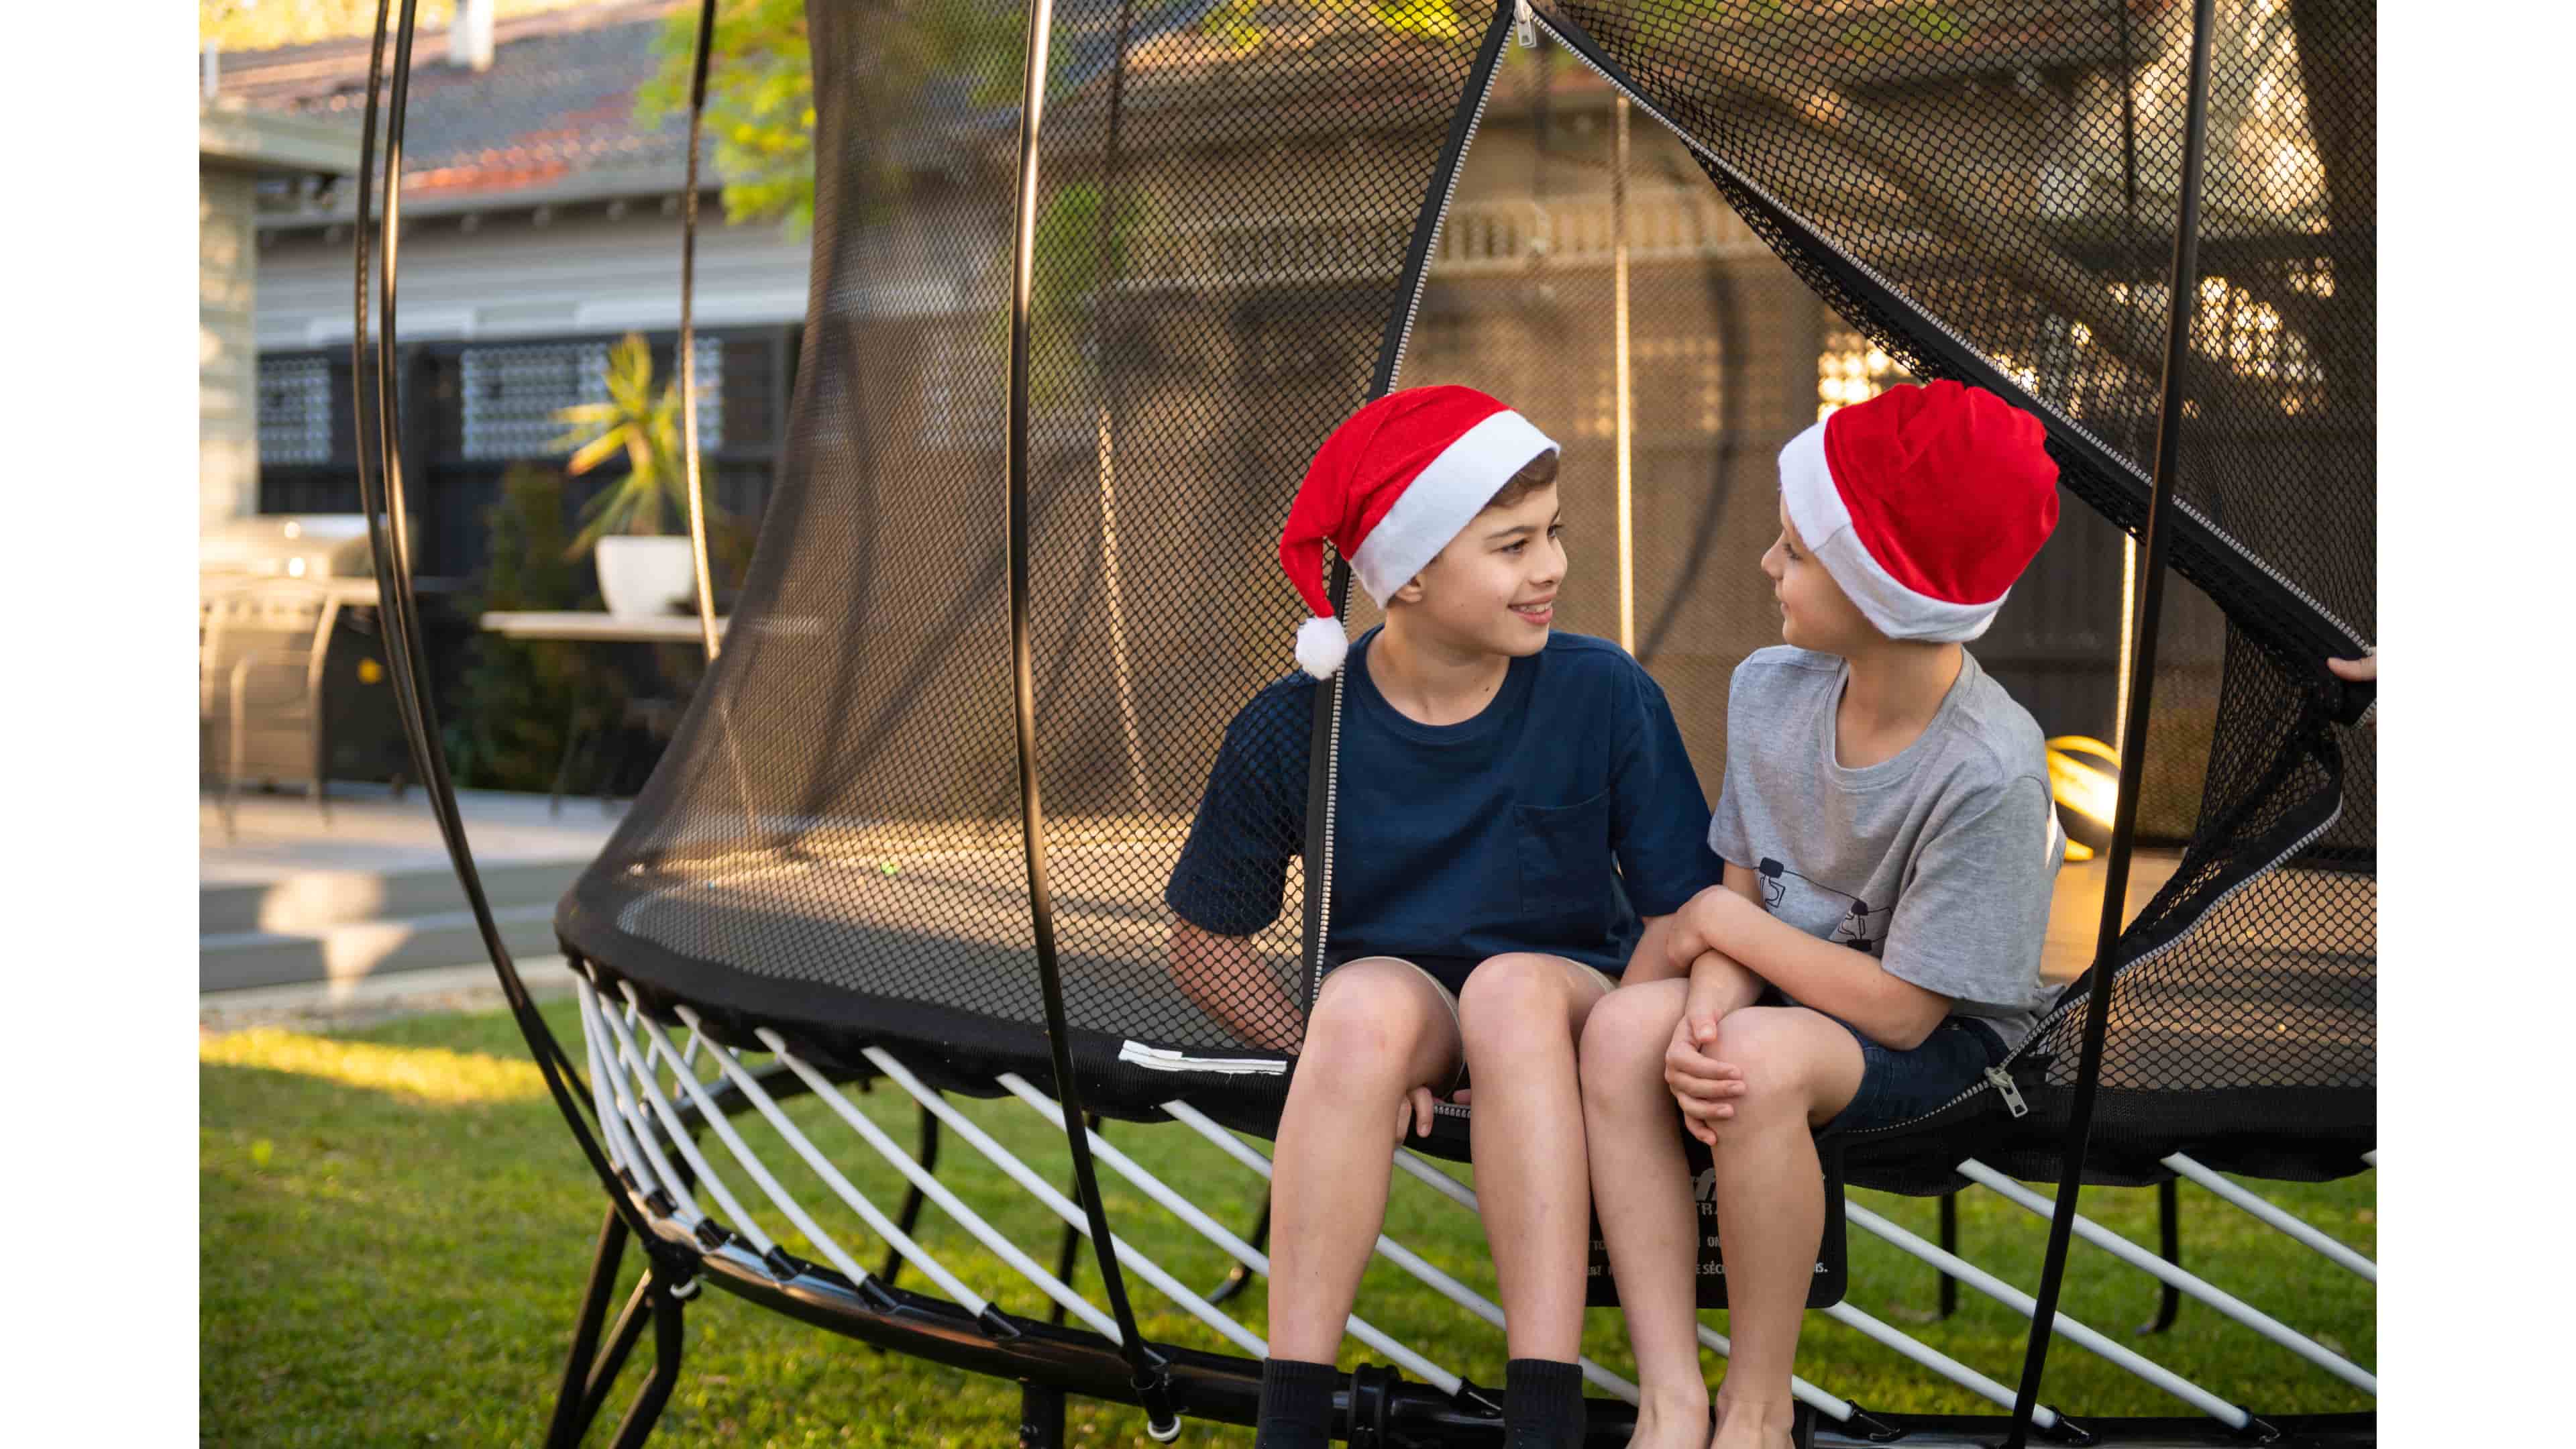 Joyful Jingles | Top 10 Christmas Gift Ideas for Grandkids